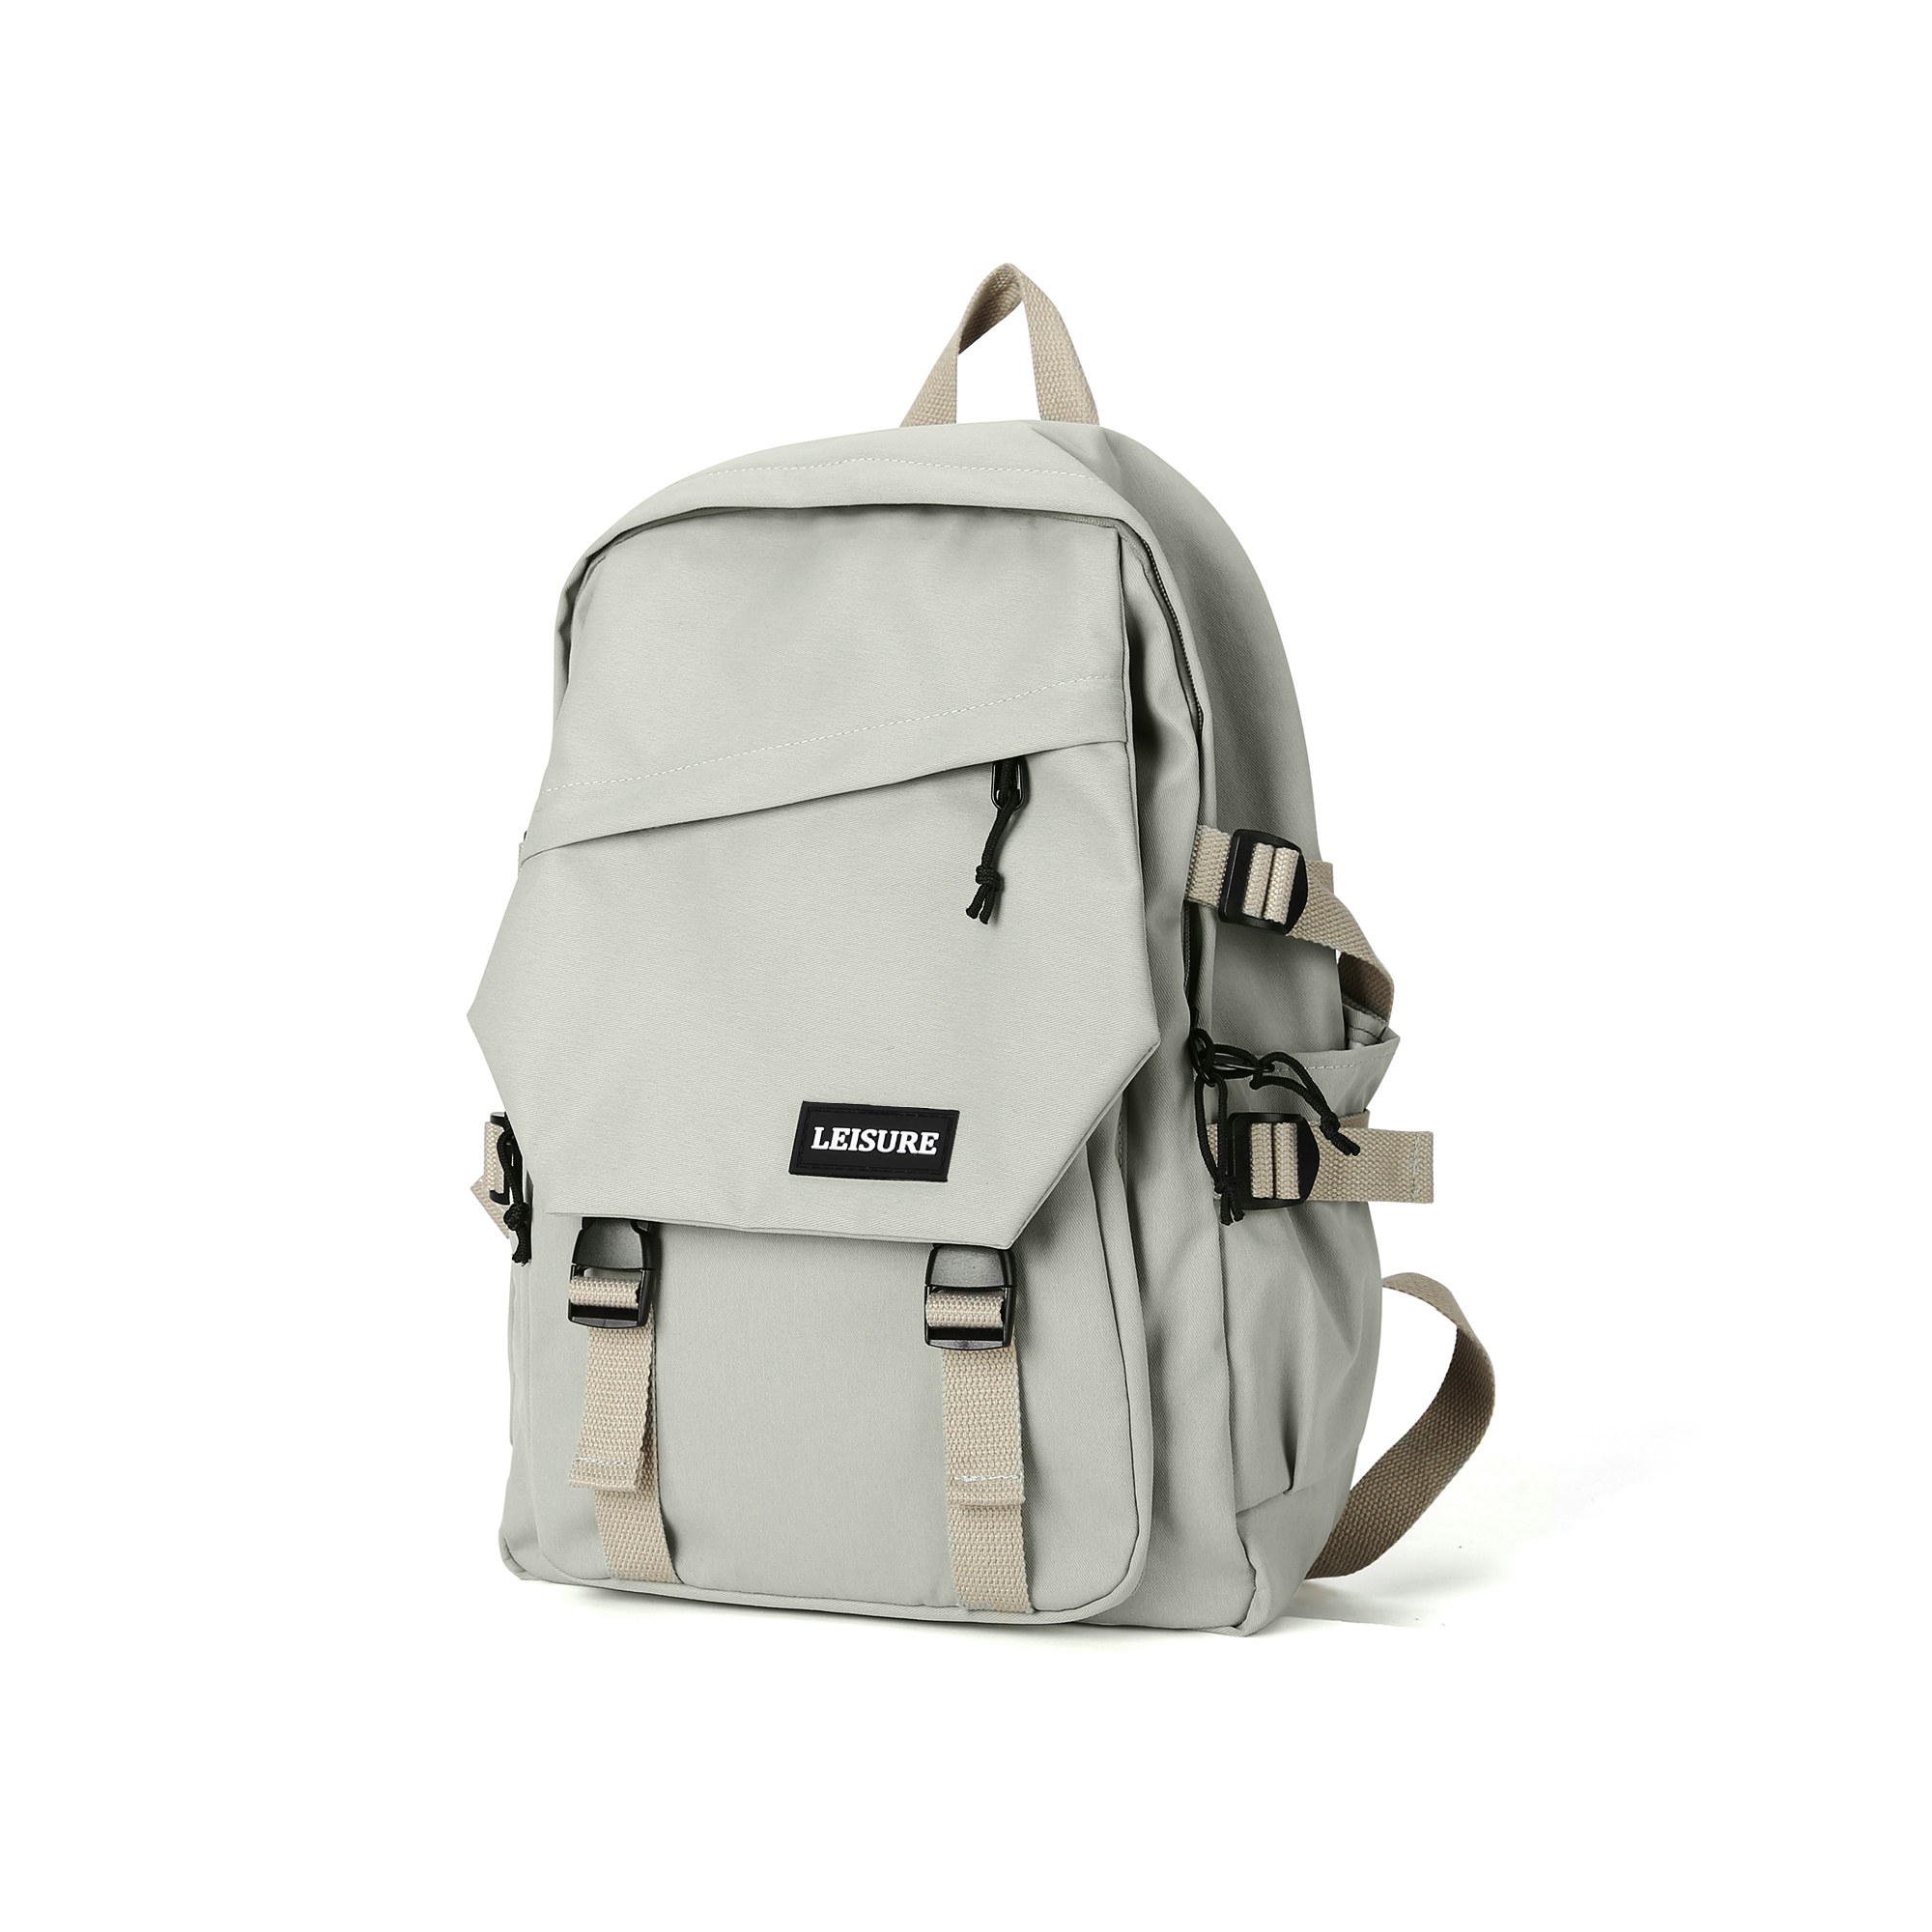 Aesthetic School Backpack Waterproof Black Bookbag College High School Bags for Boys Girls Lightweight Travel Casual Daypack Laptop Backpacks for Men Women - image 1 of 4